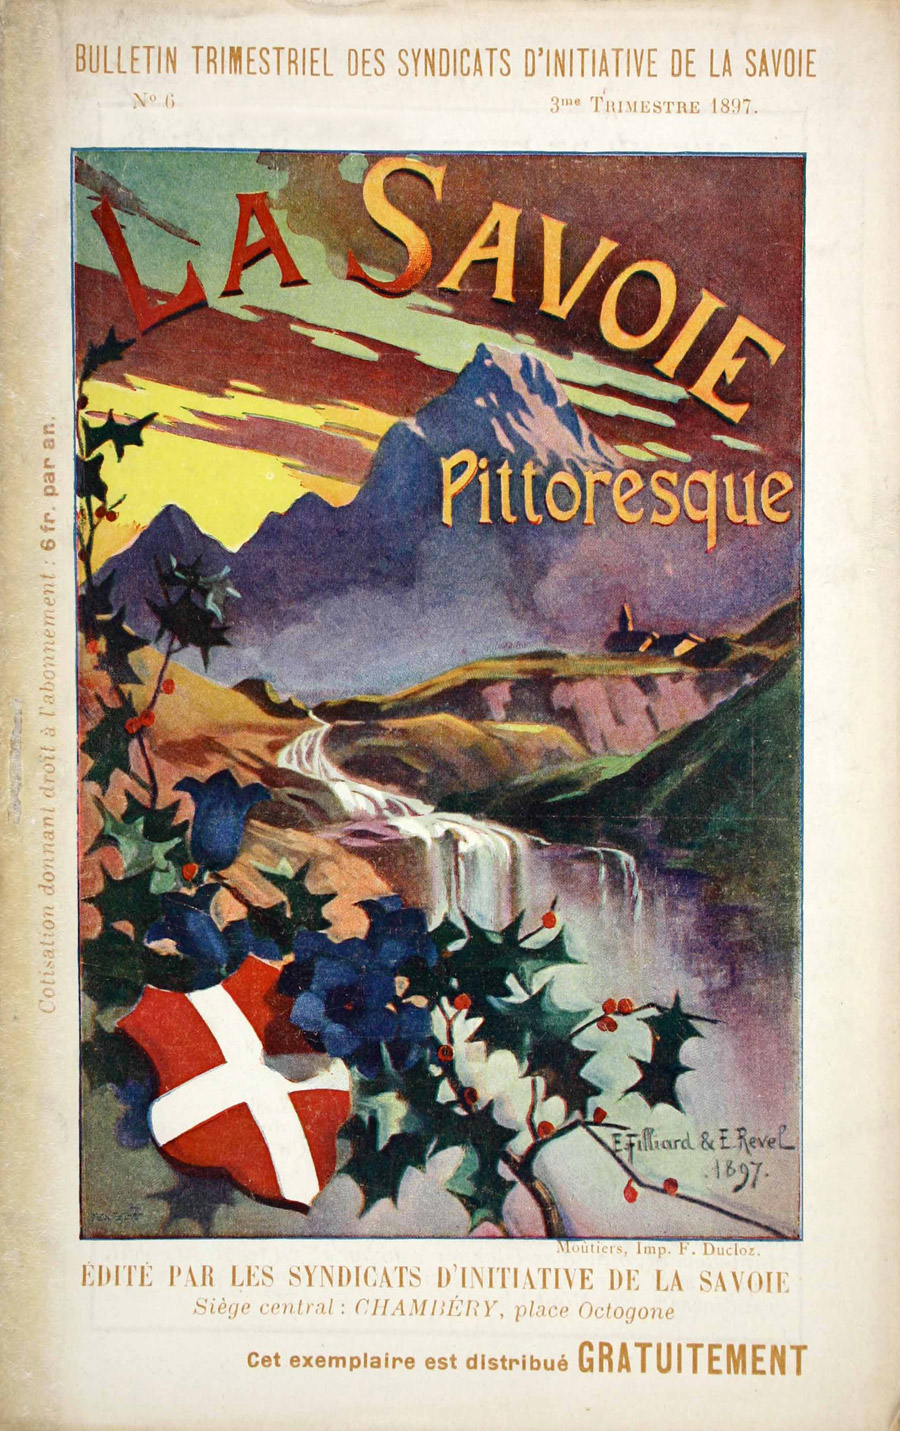 La Savoie pittoresque, 1897